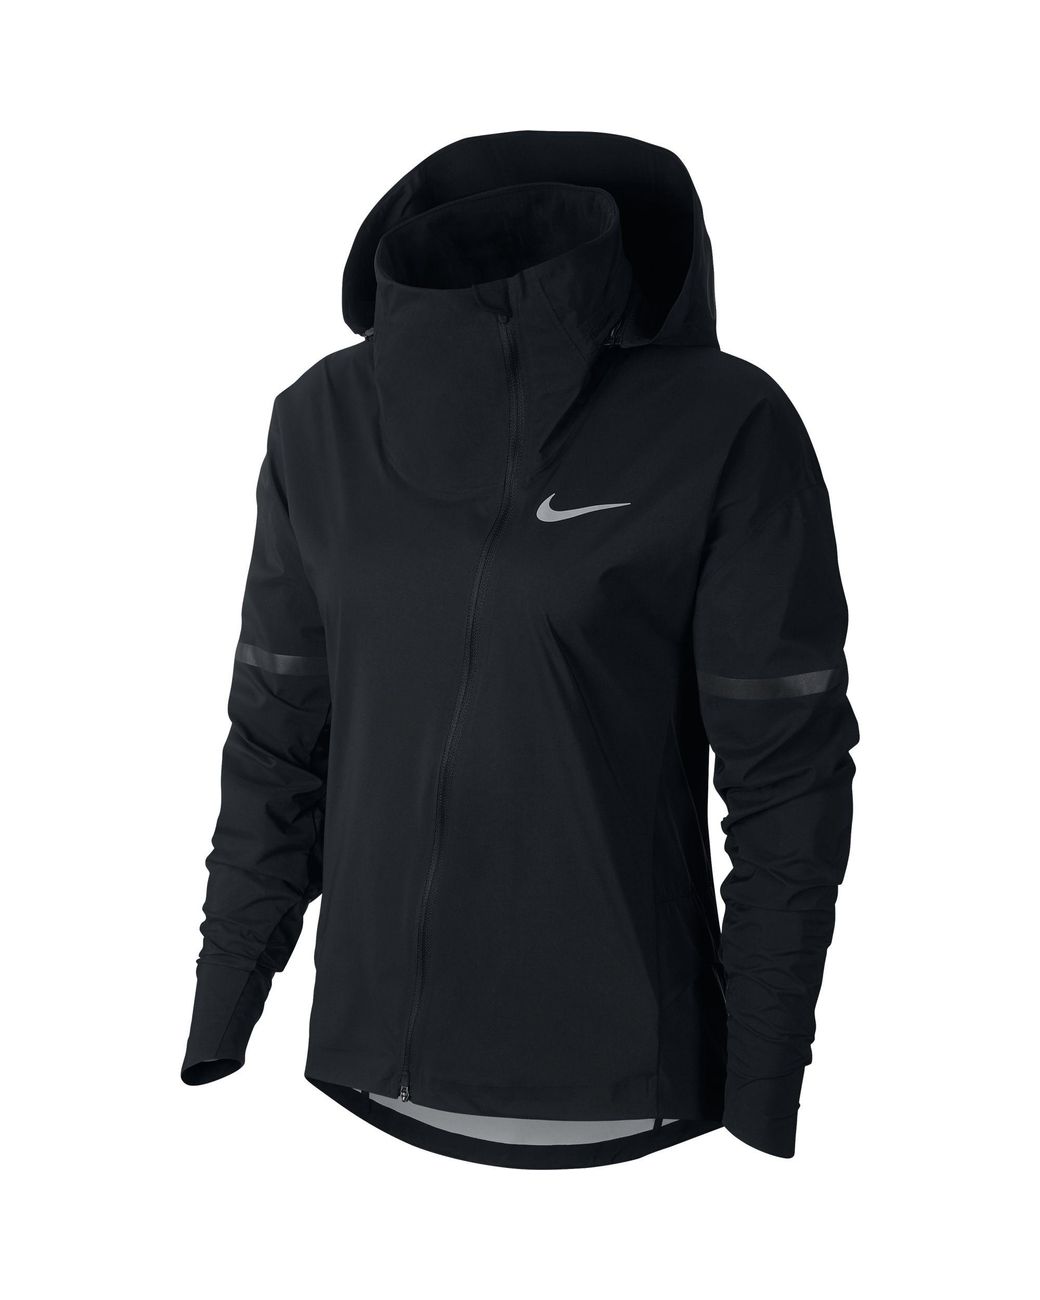 Nike Aeroshield Hooded Running Jacket in Black - Lyst